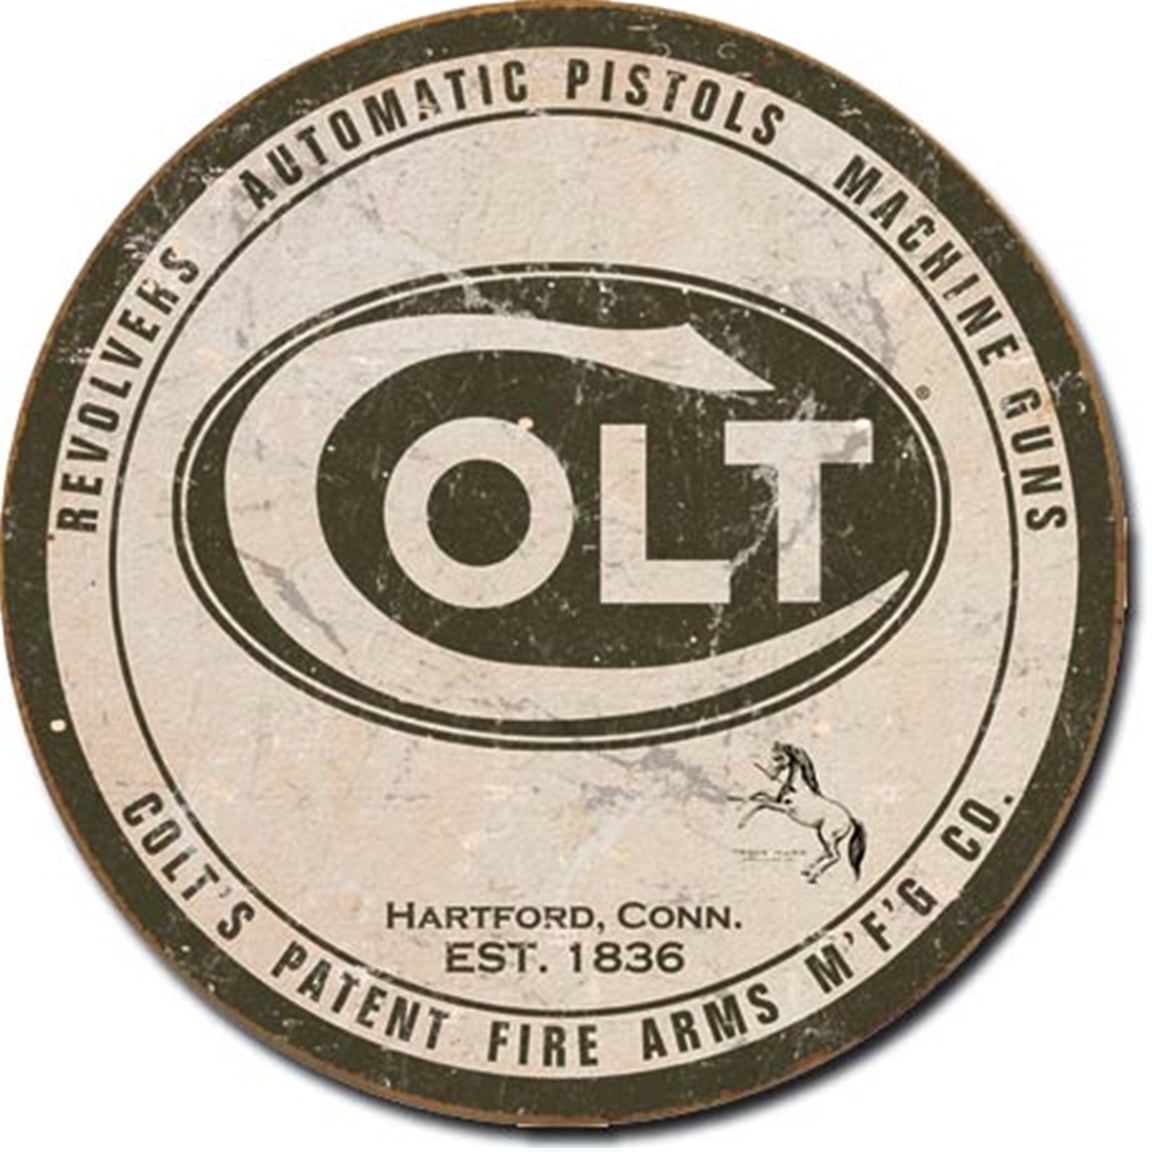 Colt Round Tin Sign